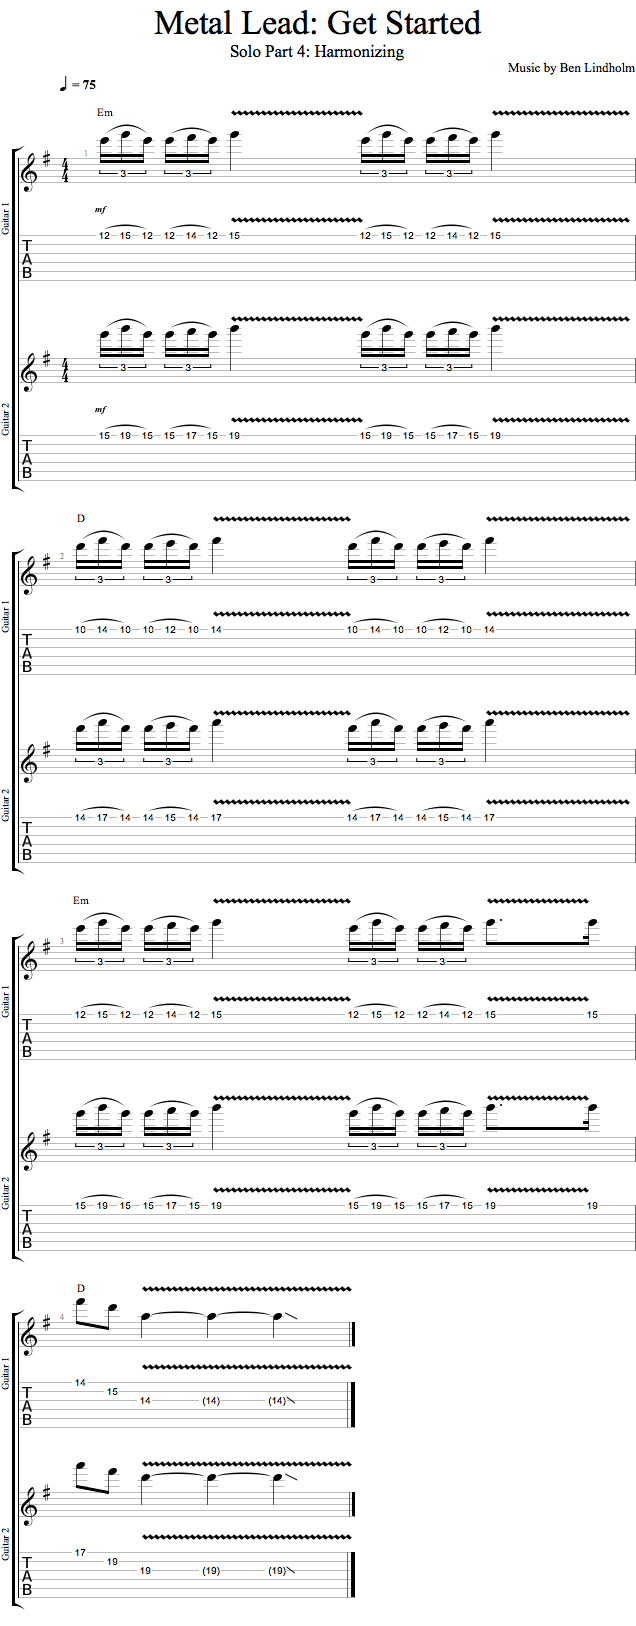 Play Along: Harmonizing song notation